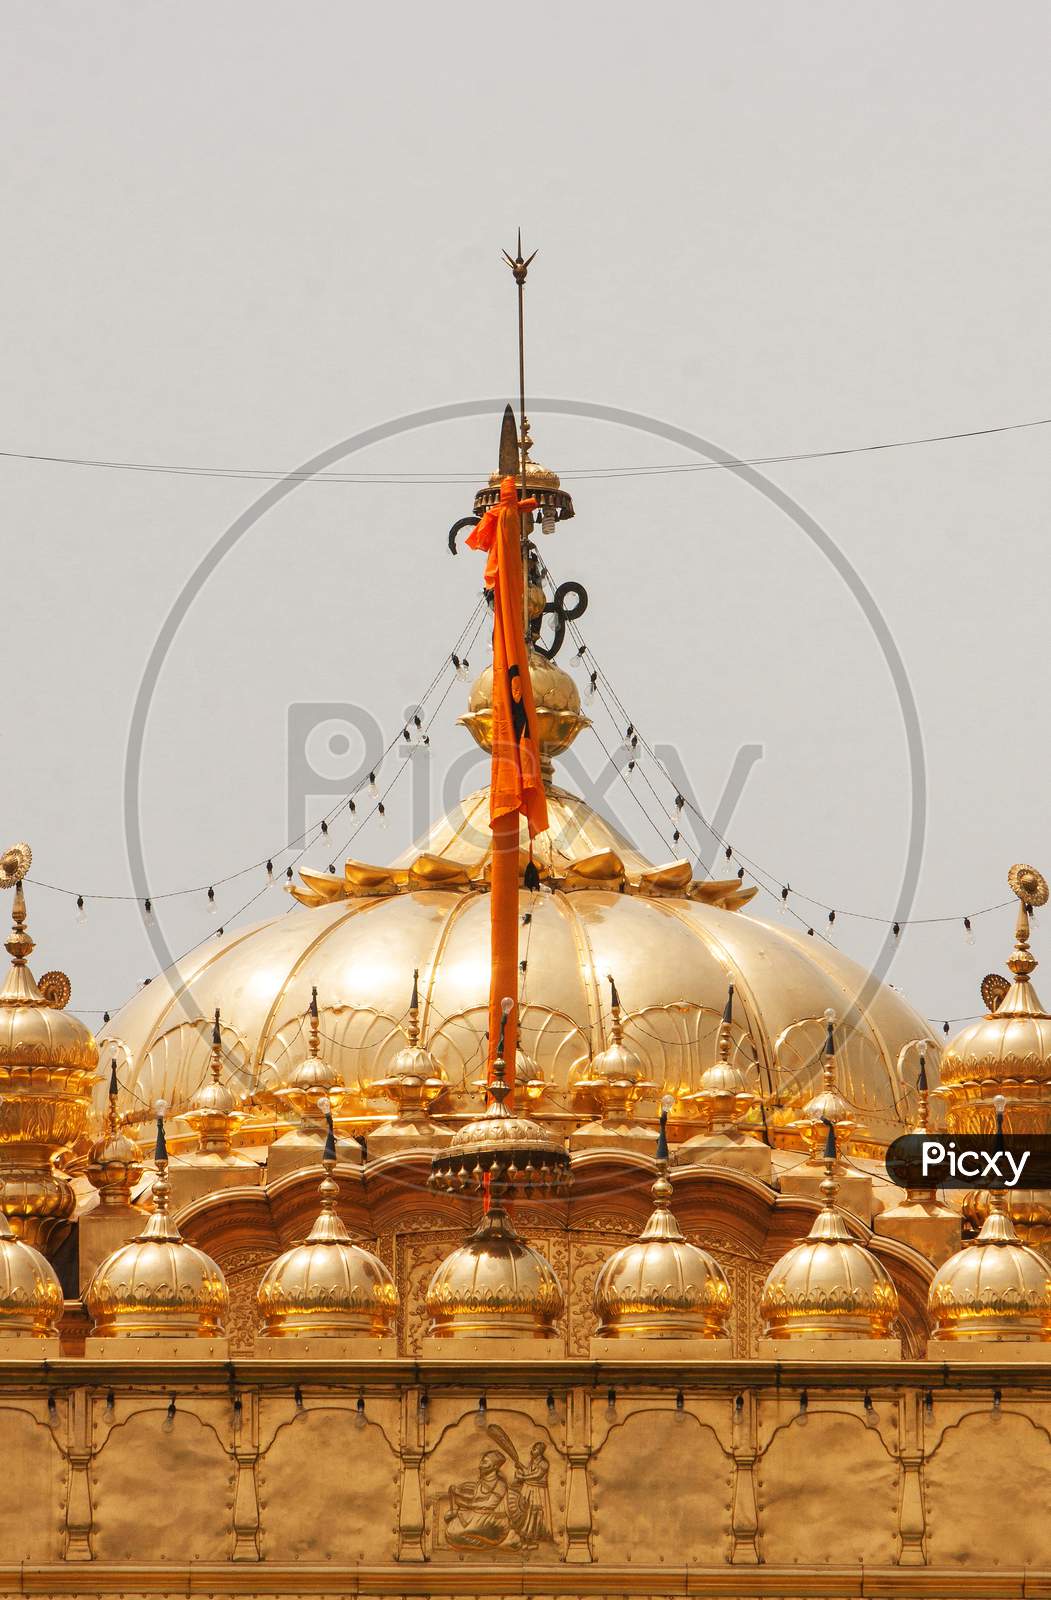 Top dome of  the Golden Temple or Harmandir Sahib